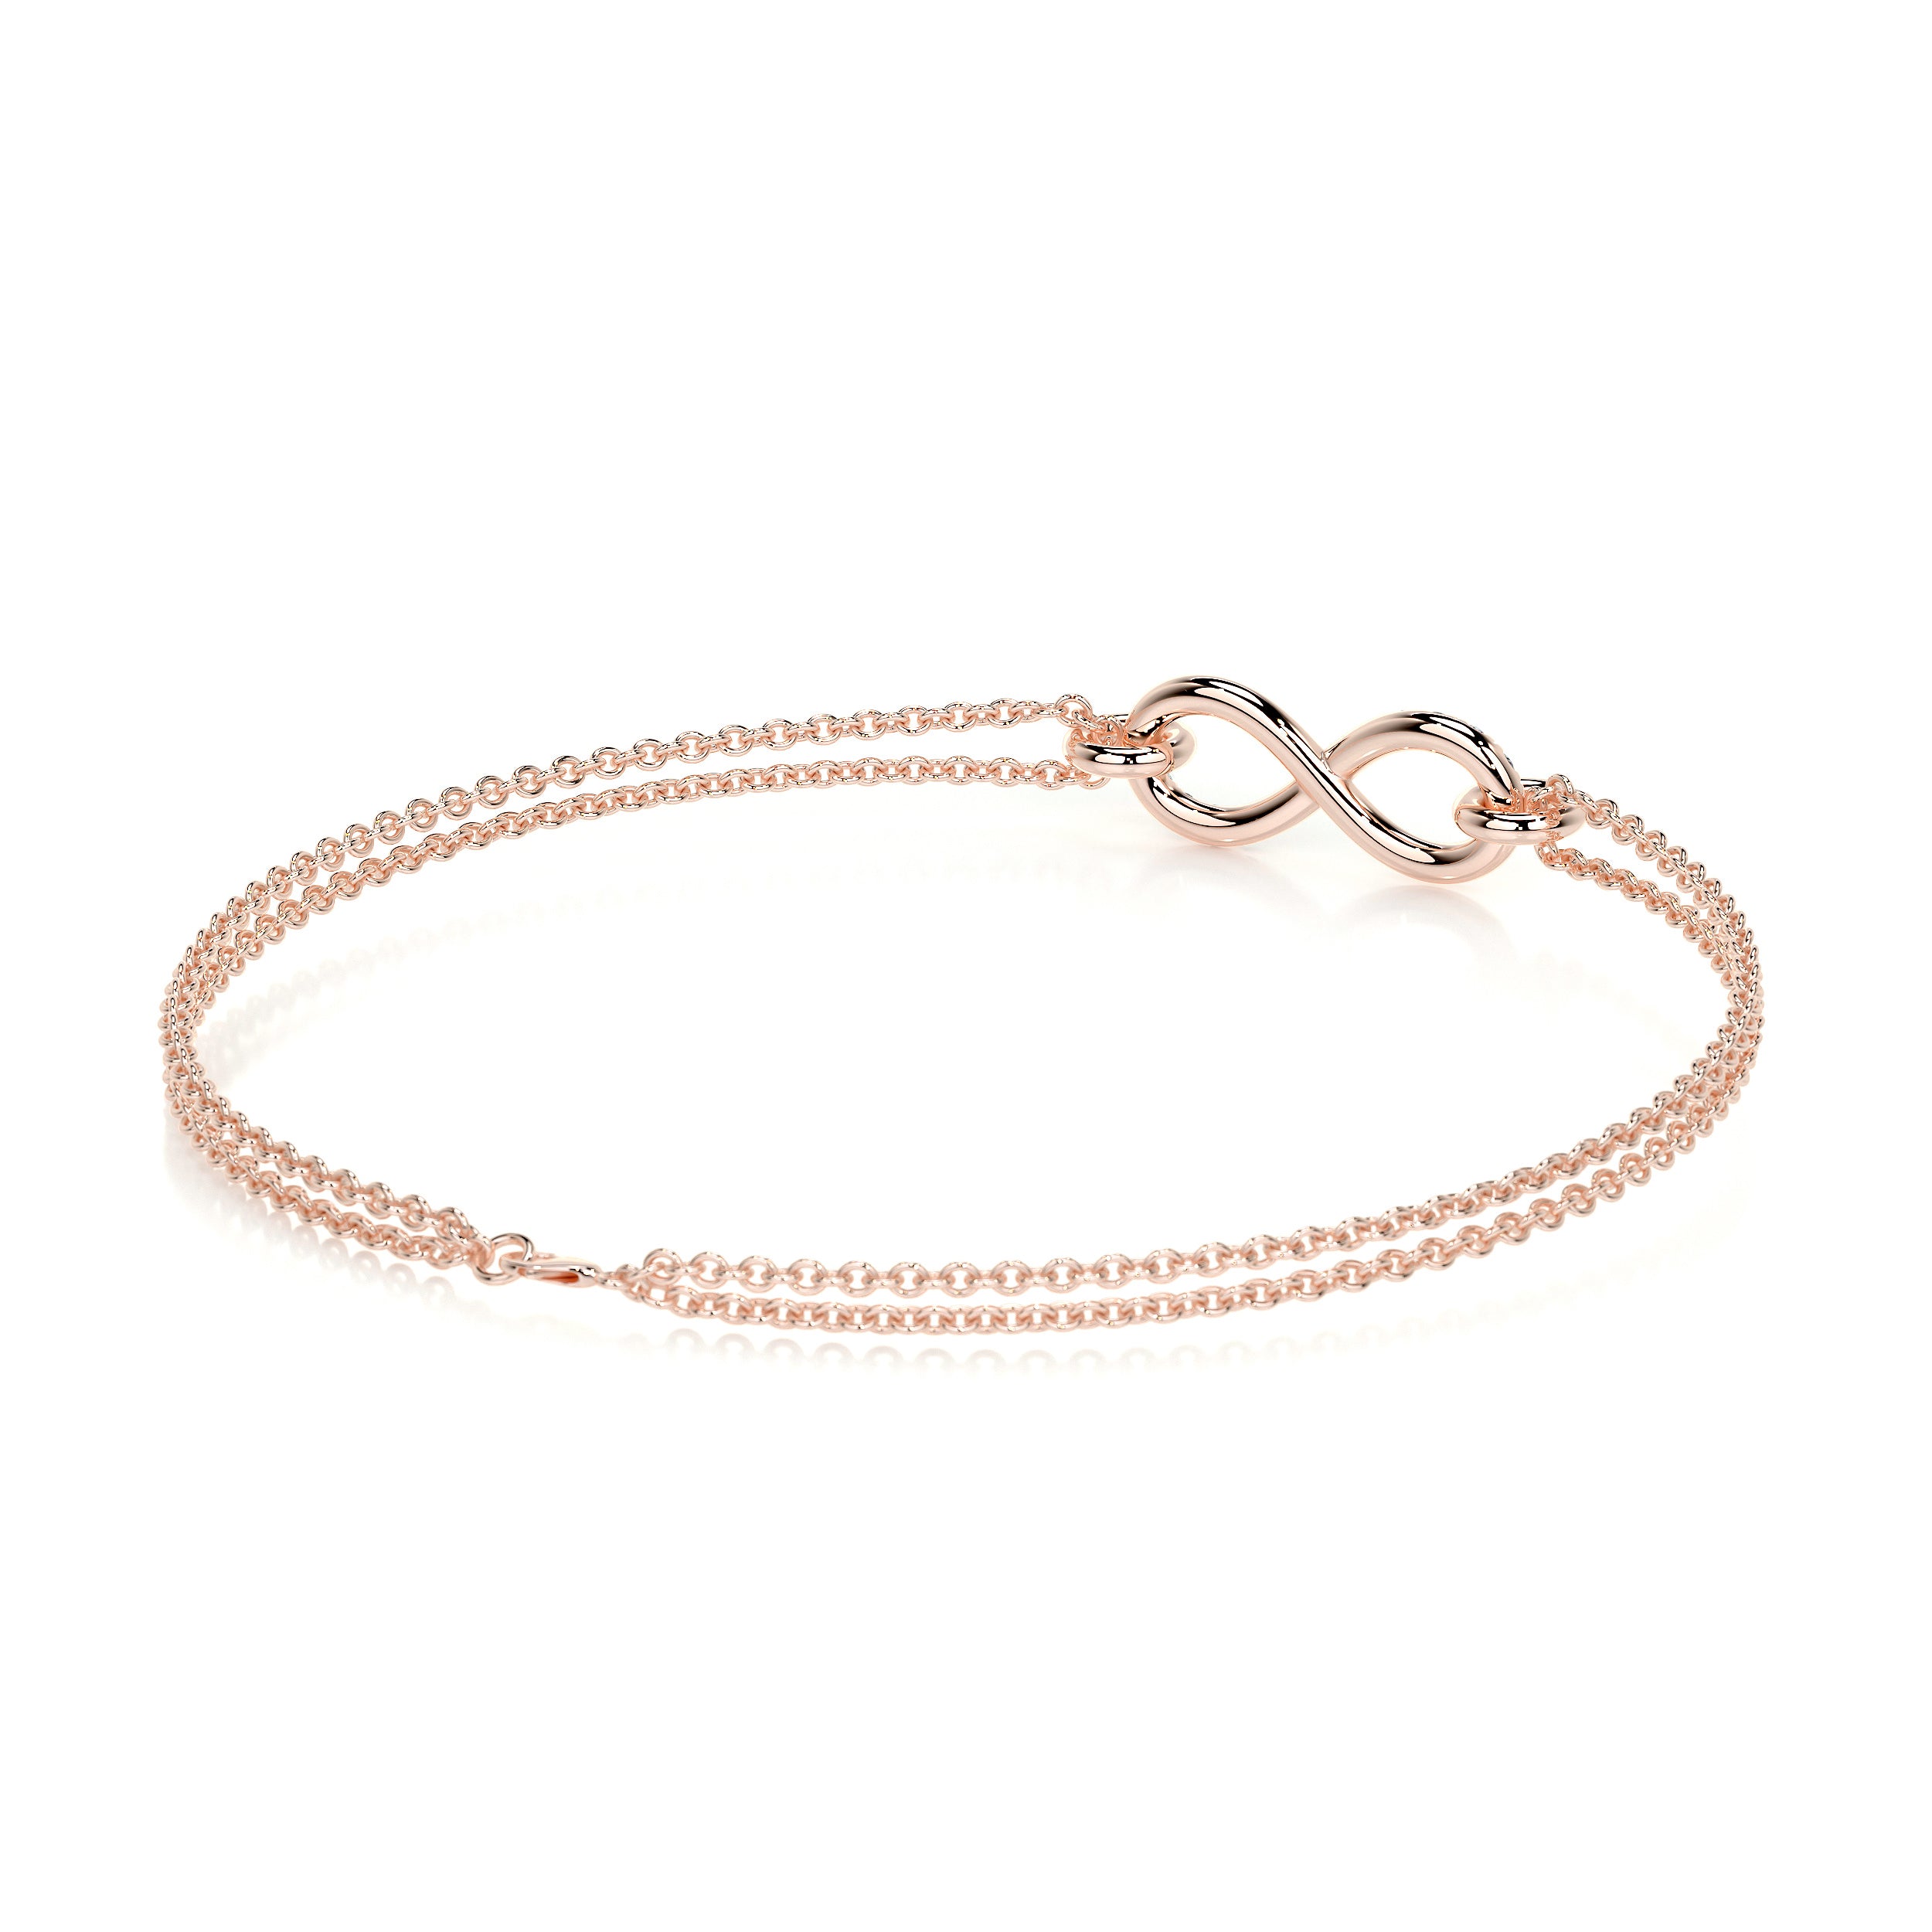 Candice Diamonds Bracelet   (0.07 Carat) -14K Rose Gold